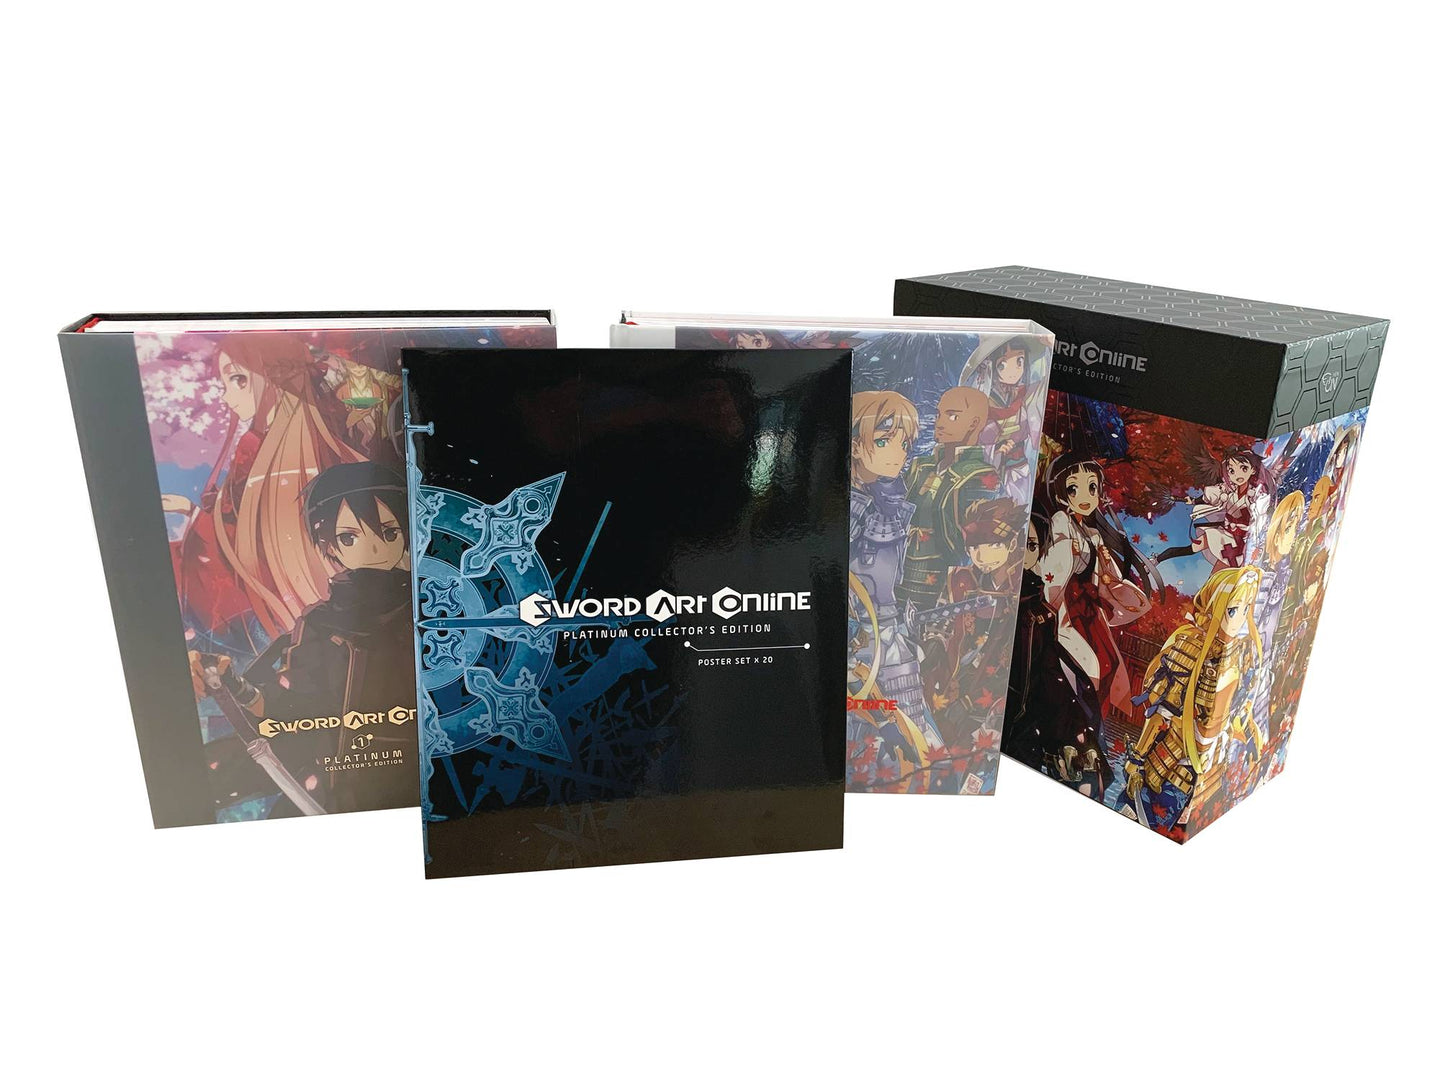 Sword Art Online Platinum Collectors Edition Hardcover Box Set contains 20 volumes